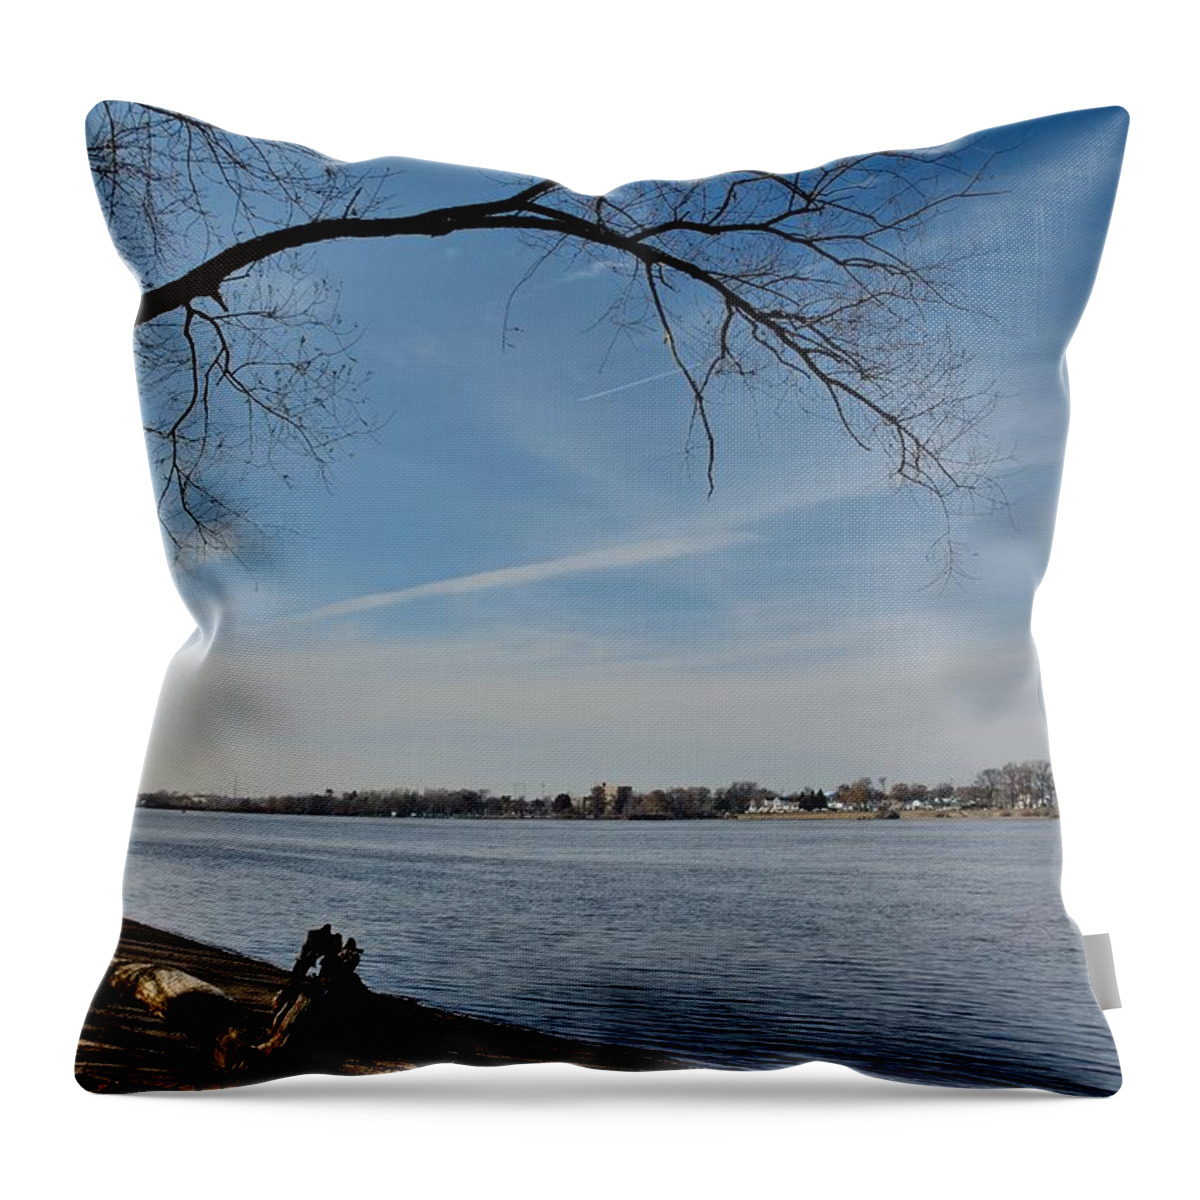 Burlington County Throw Pillow featuring the photograph Amico Island Park by Steven Richman